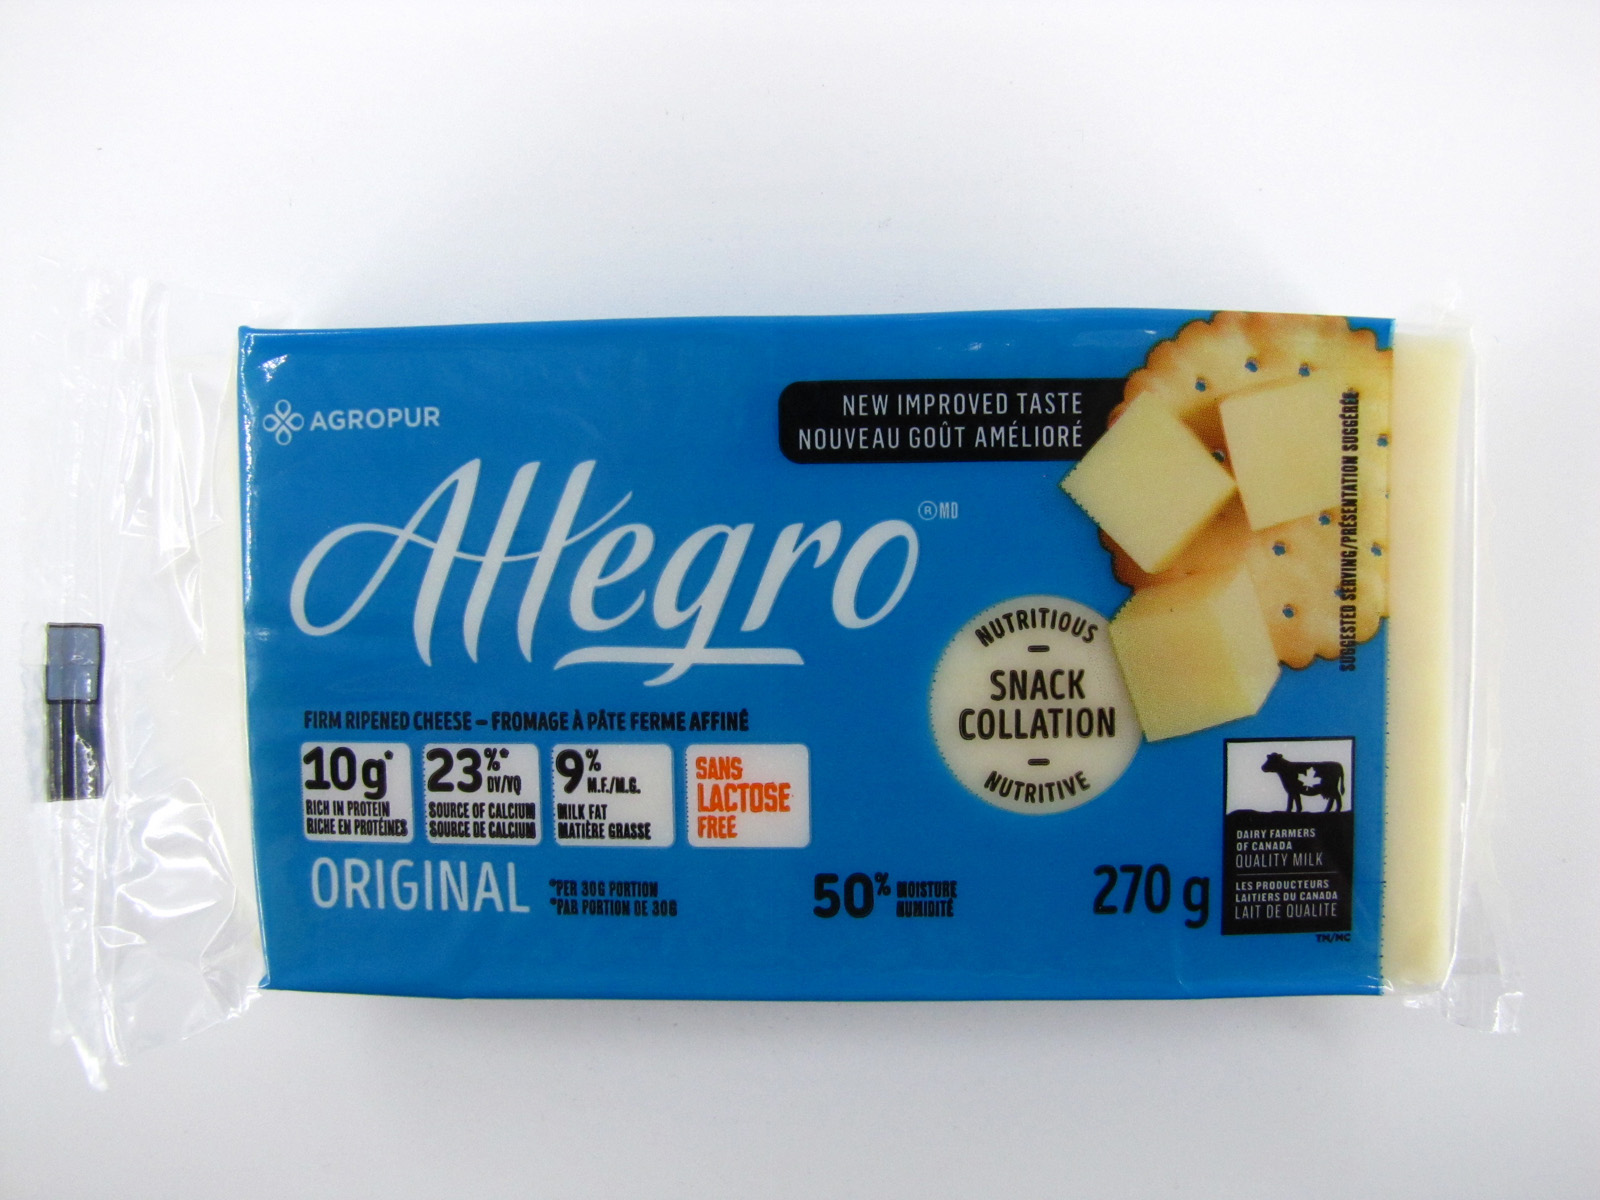 Allegro Cheese - Original front image